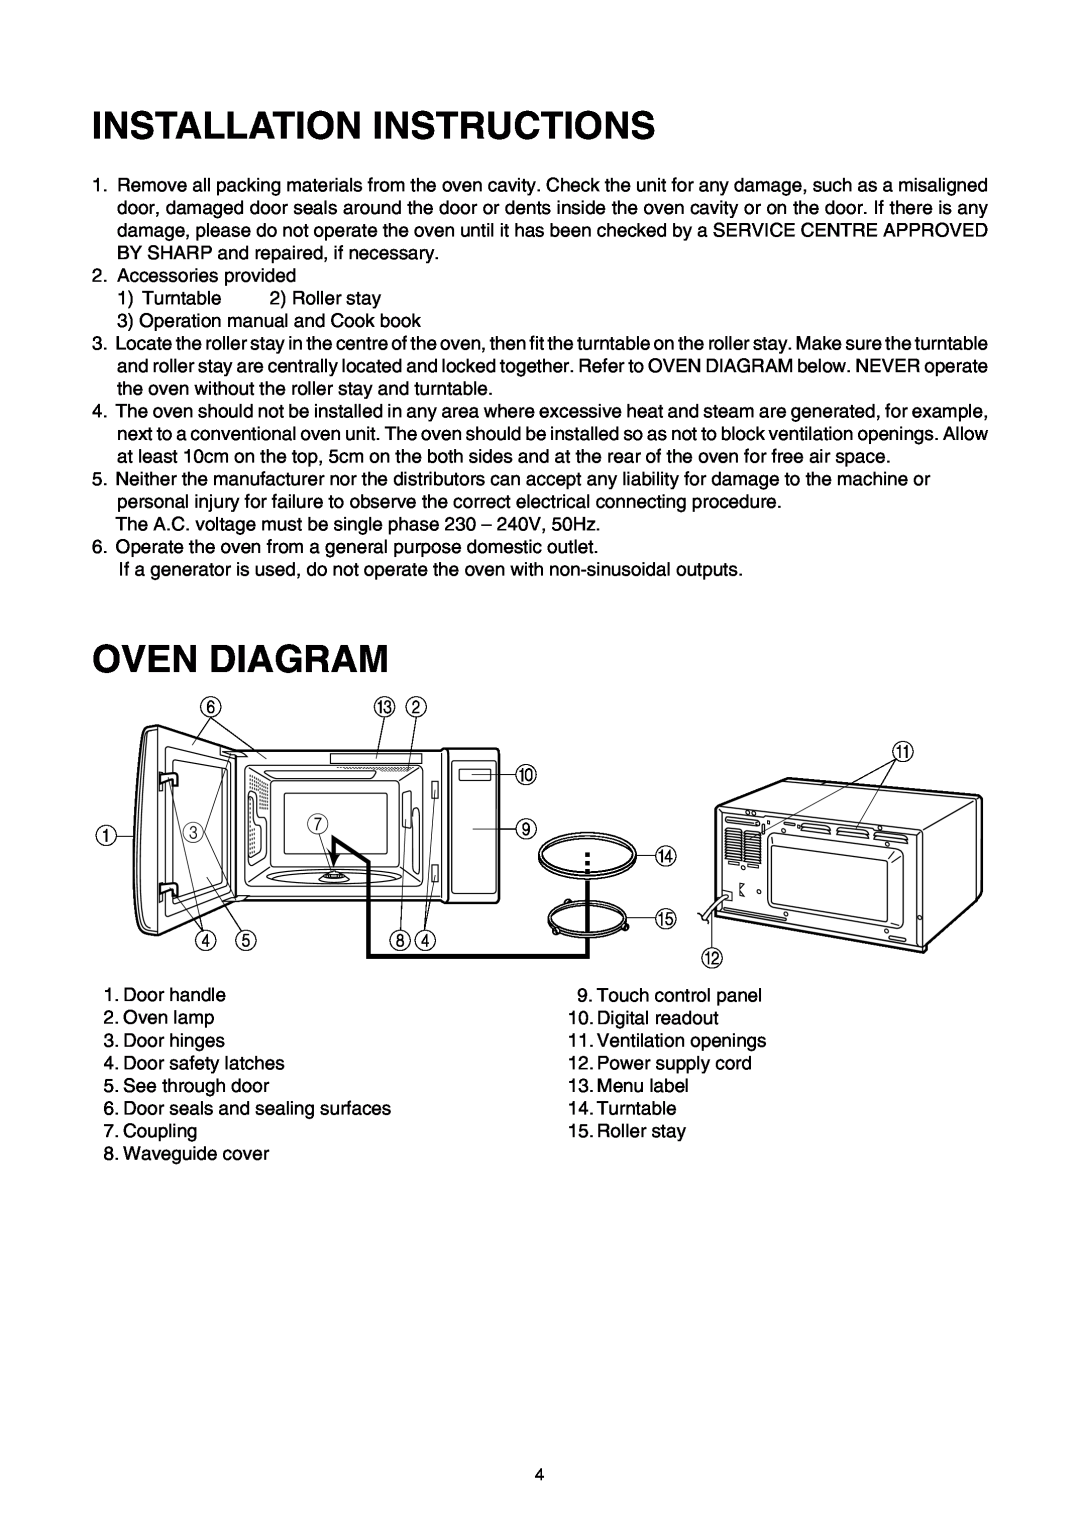 Sharp R-350E operation manual Installation Instructions, Oven Diagram, A D E B 